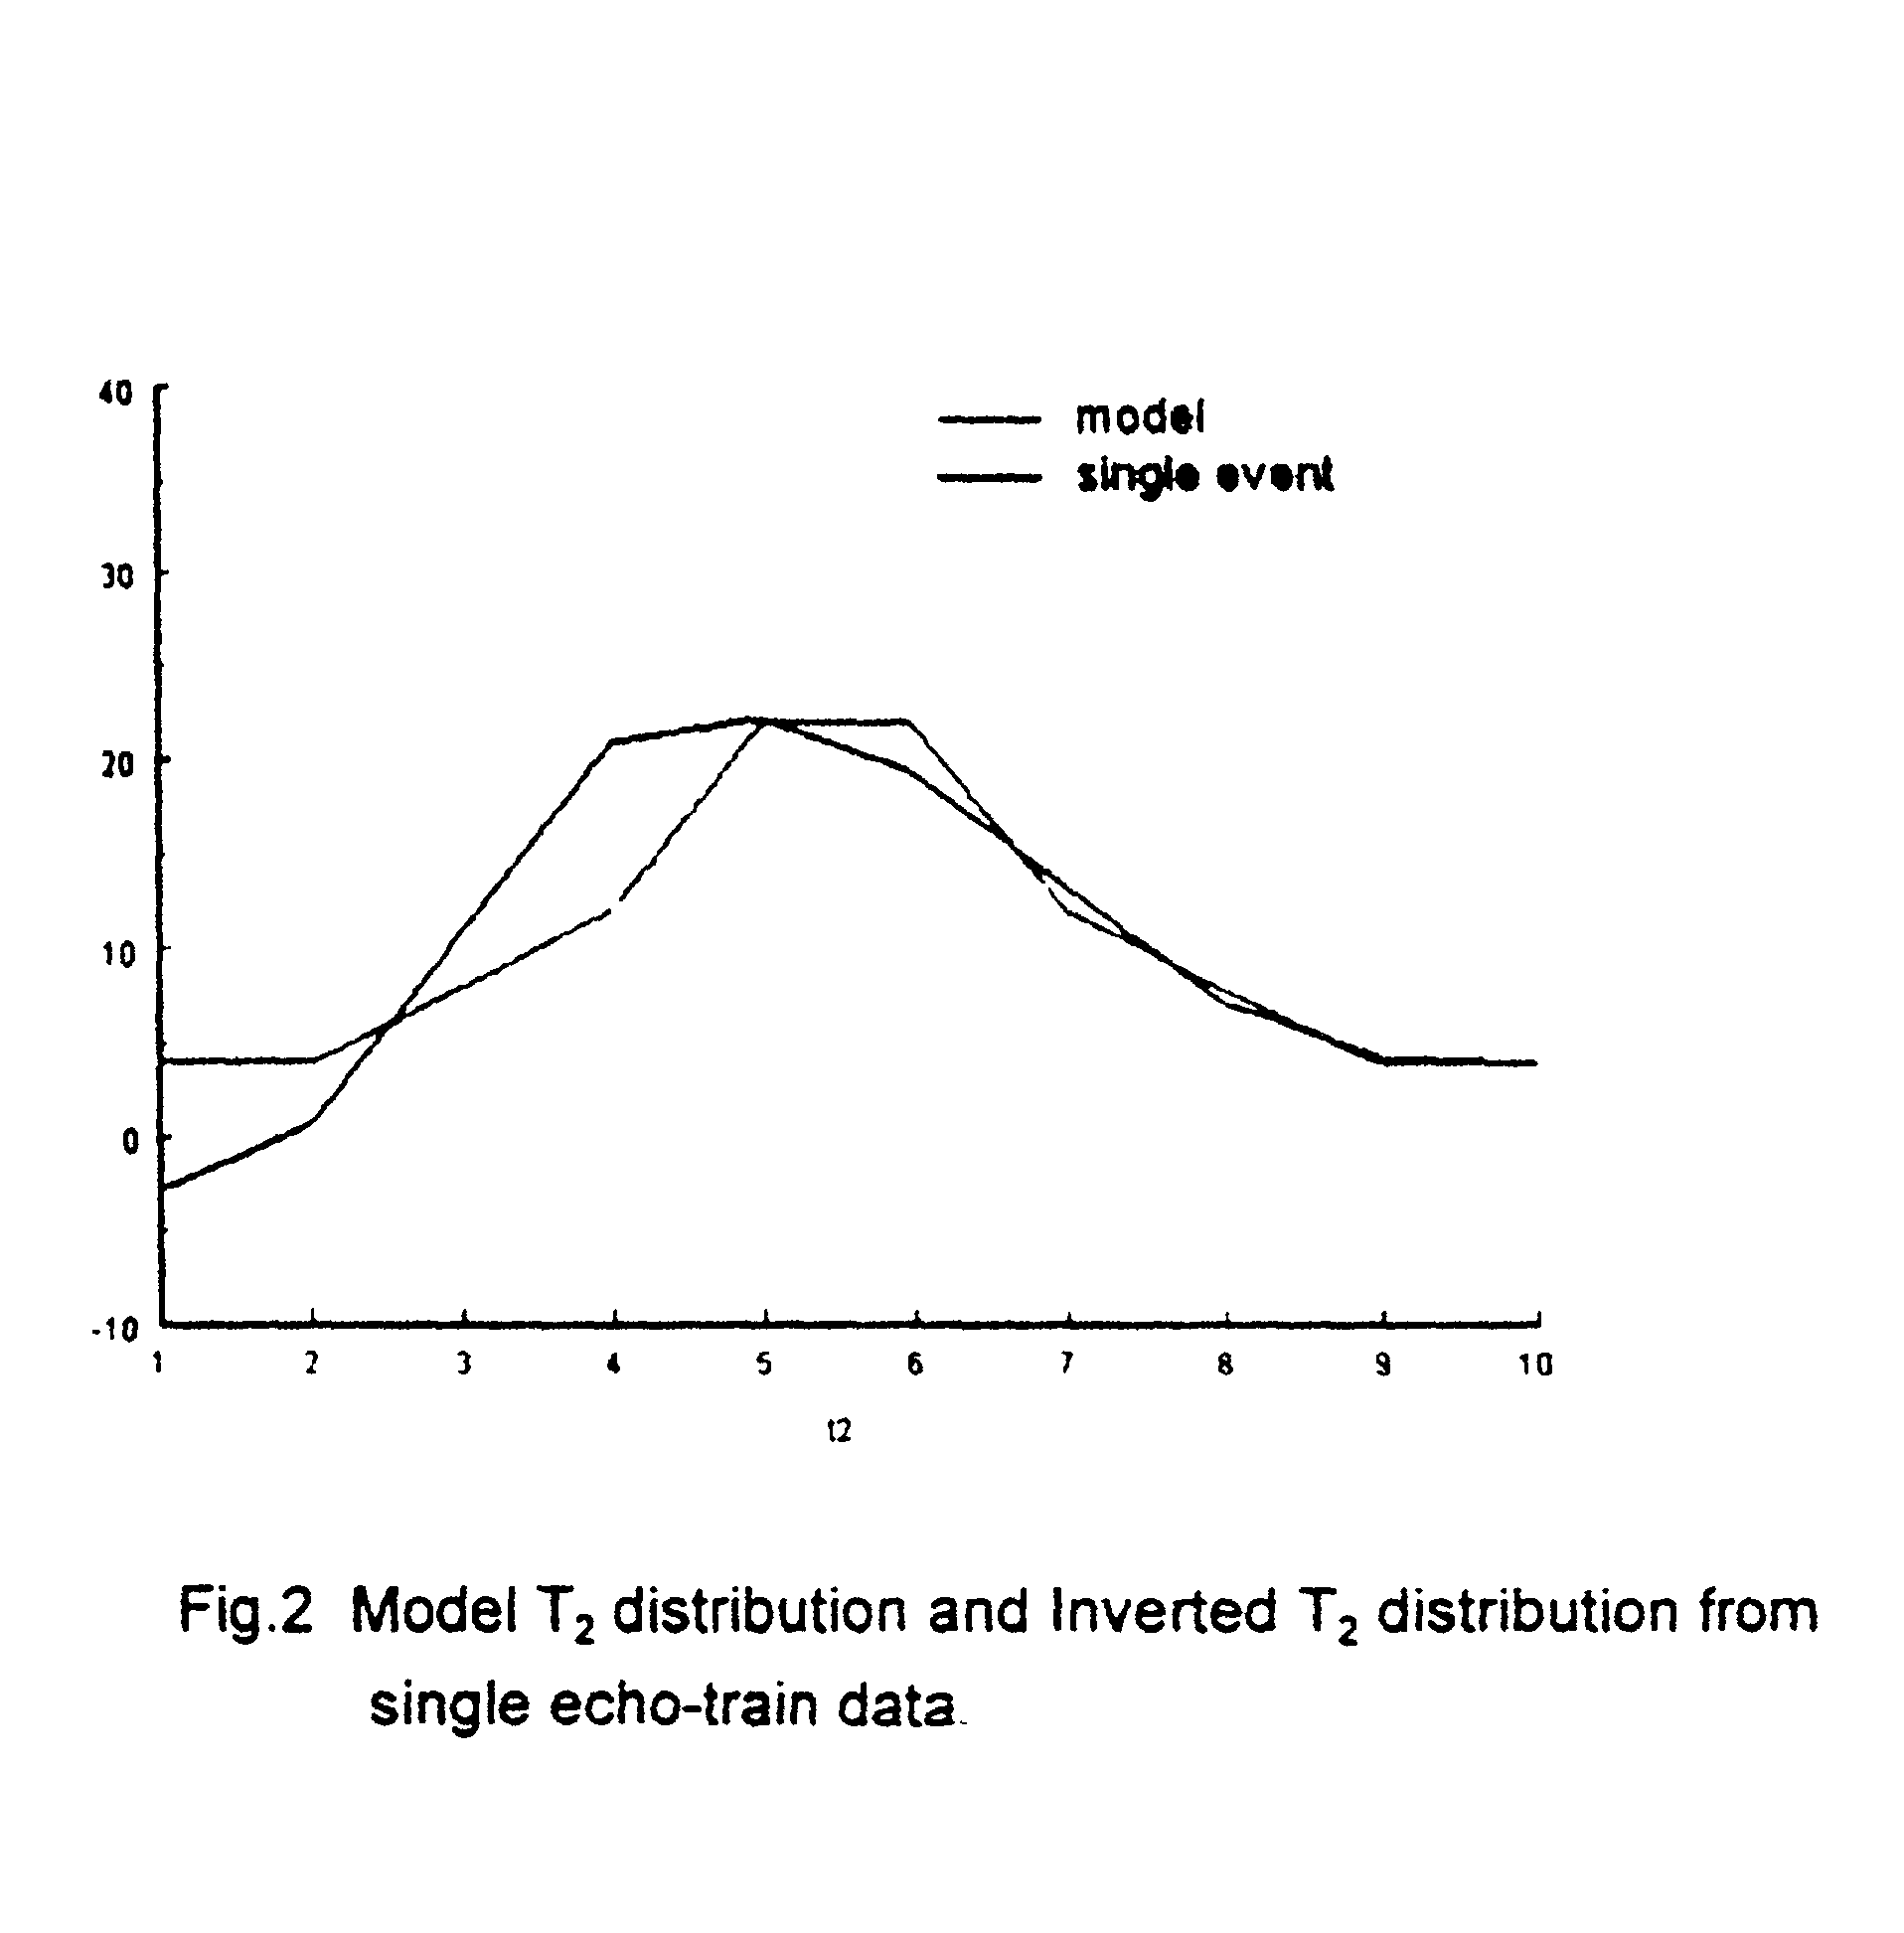 NMR logging using time-domain averaging